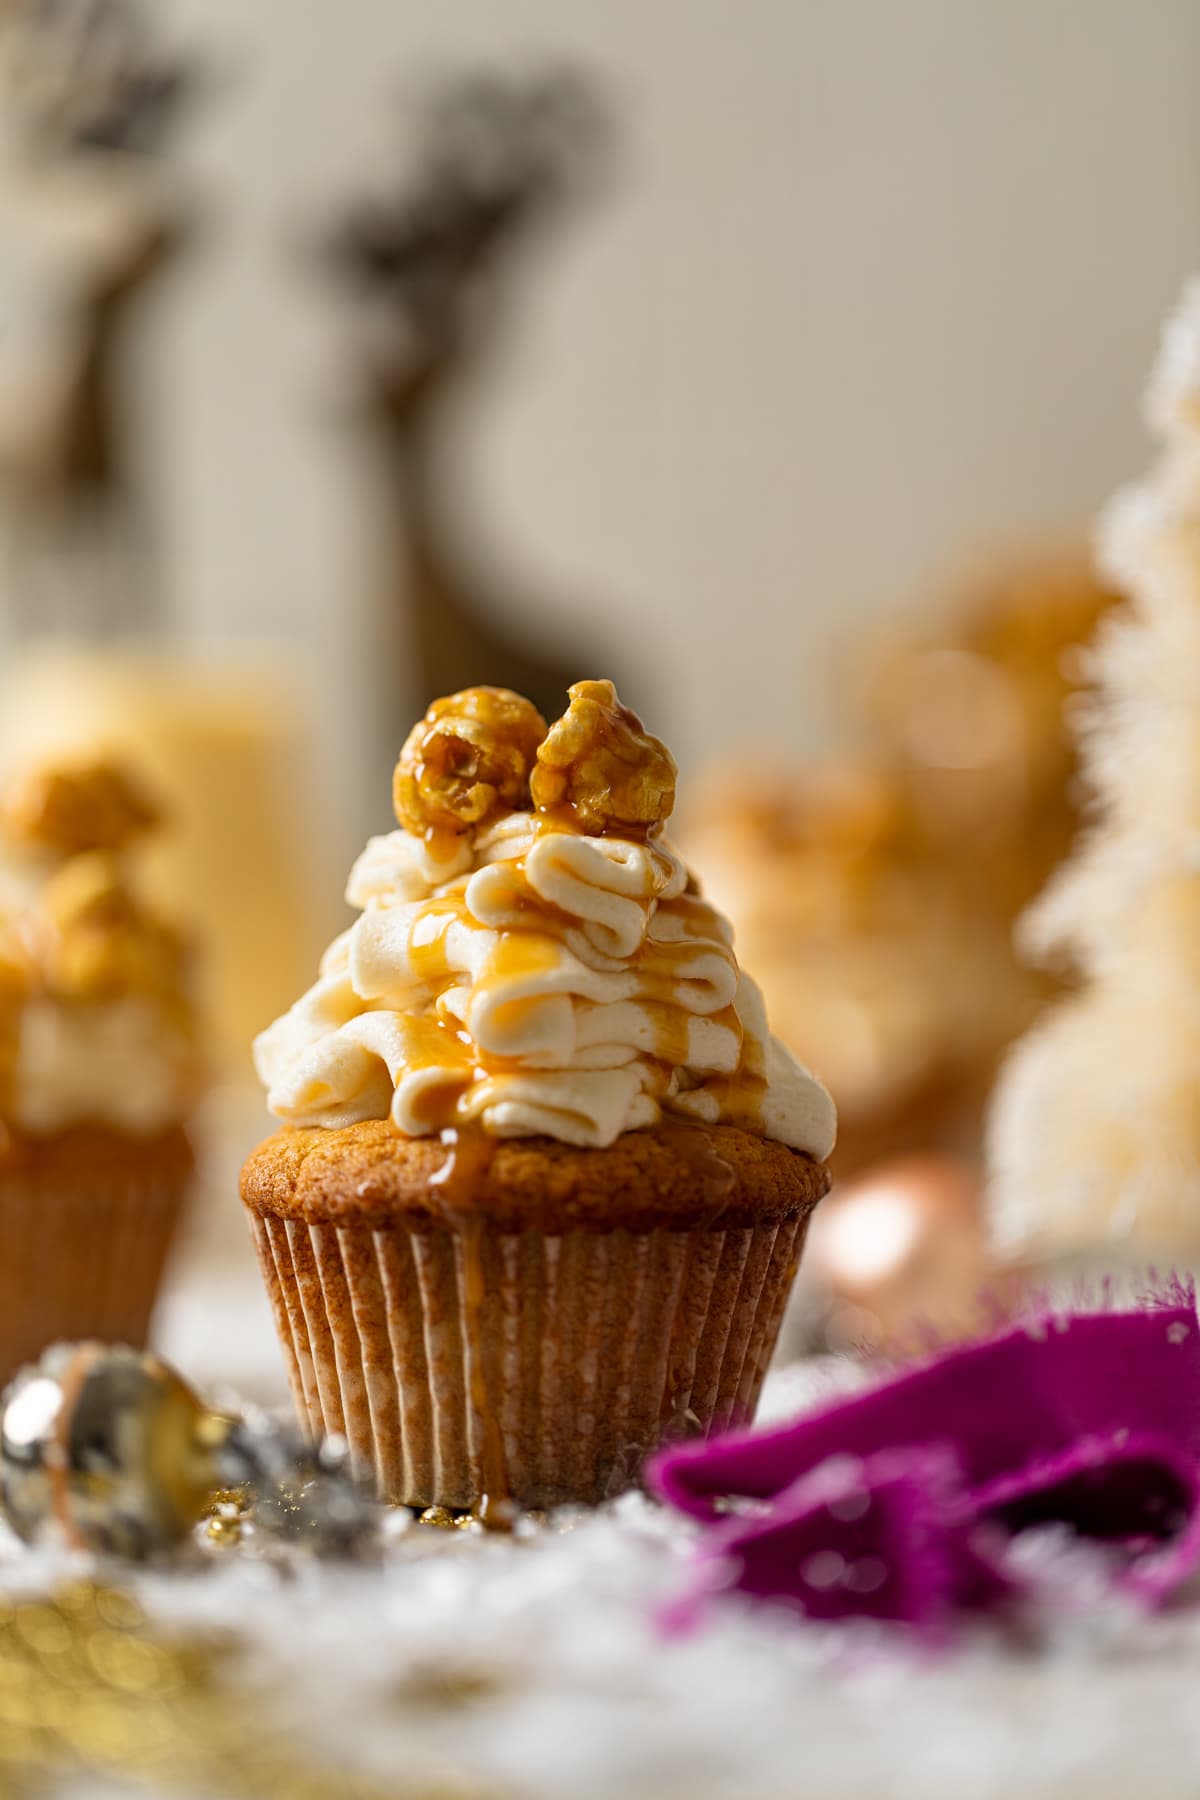 Caramel Eggnog Cupcake topped with caramel popcorn and caramel drizzle